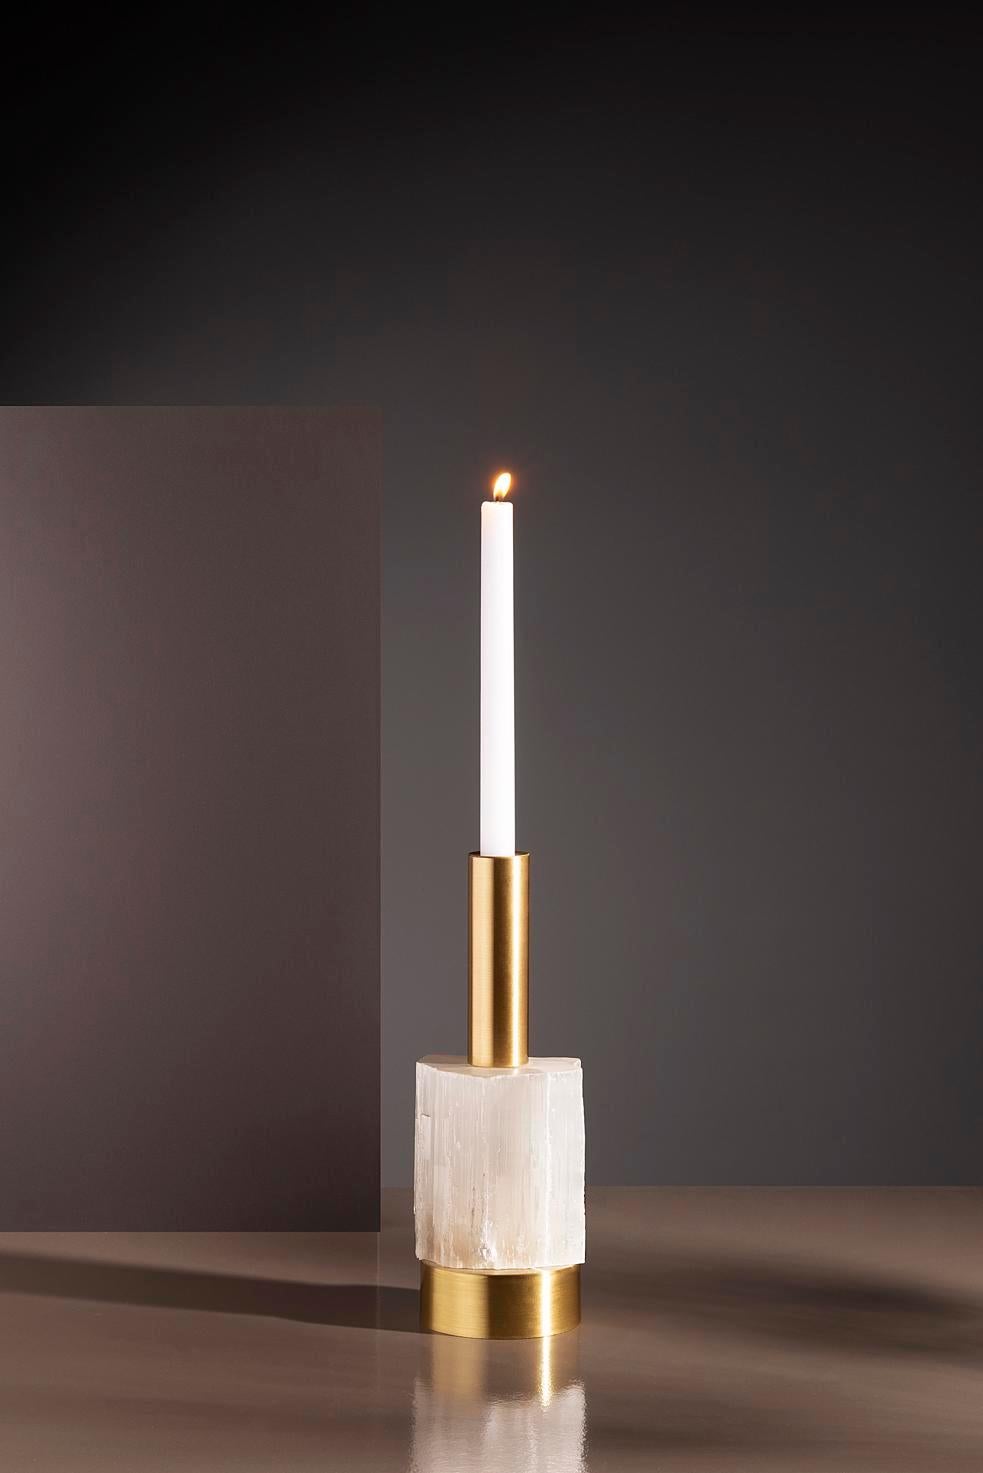 Selenite candle holder by Aver
Dimensions: D 12 x H 29 cm.
Materials: selenite, steel, resin.
 